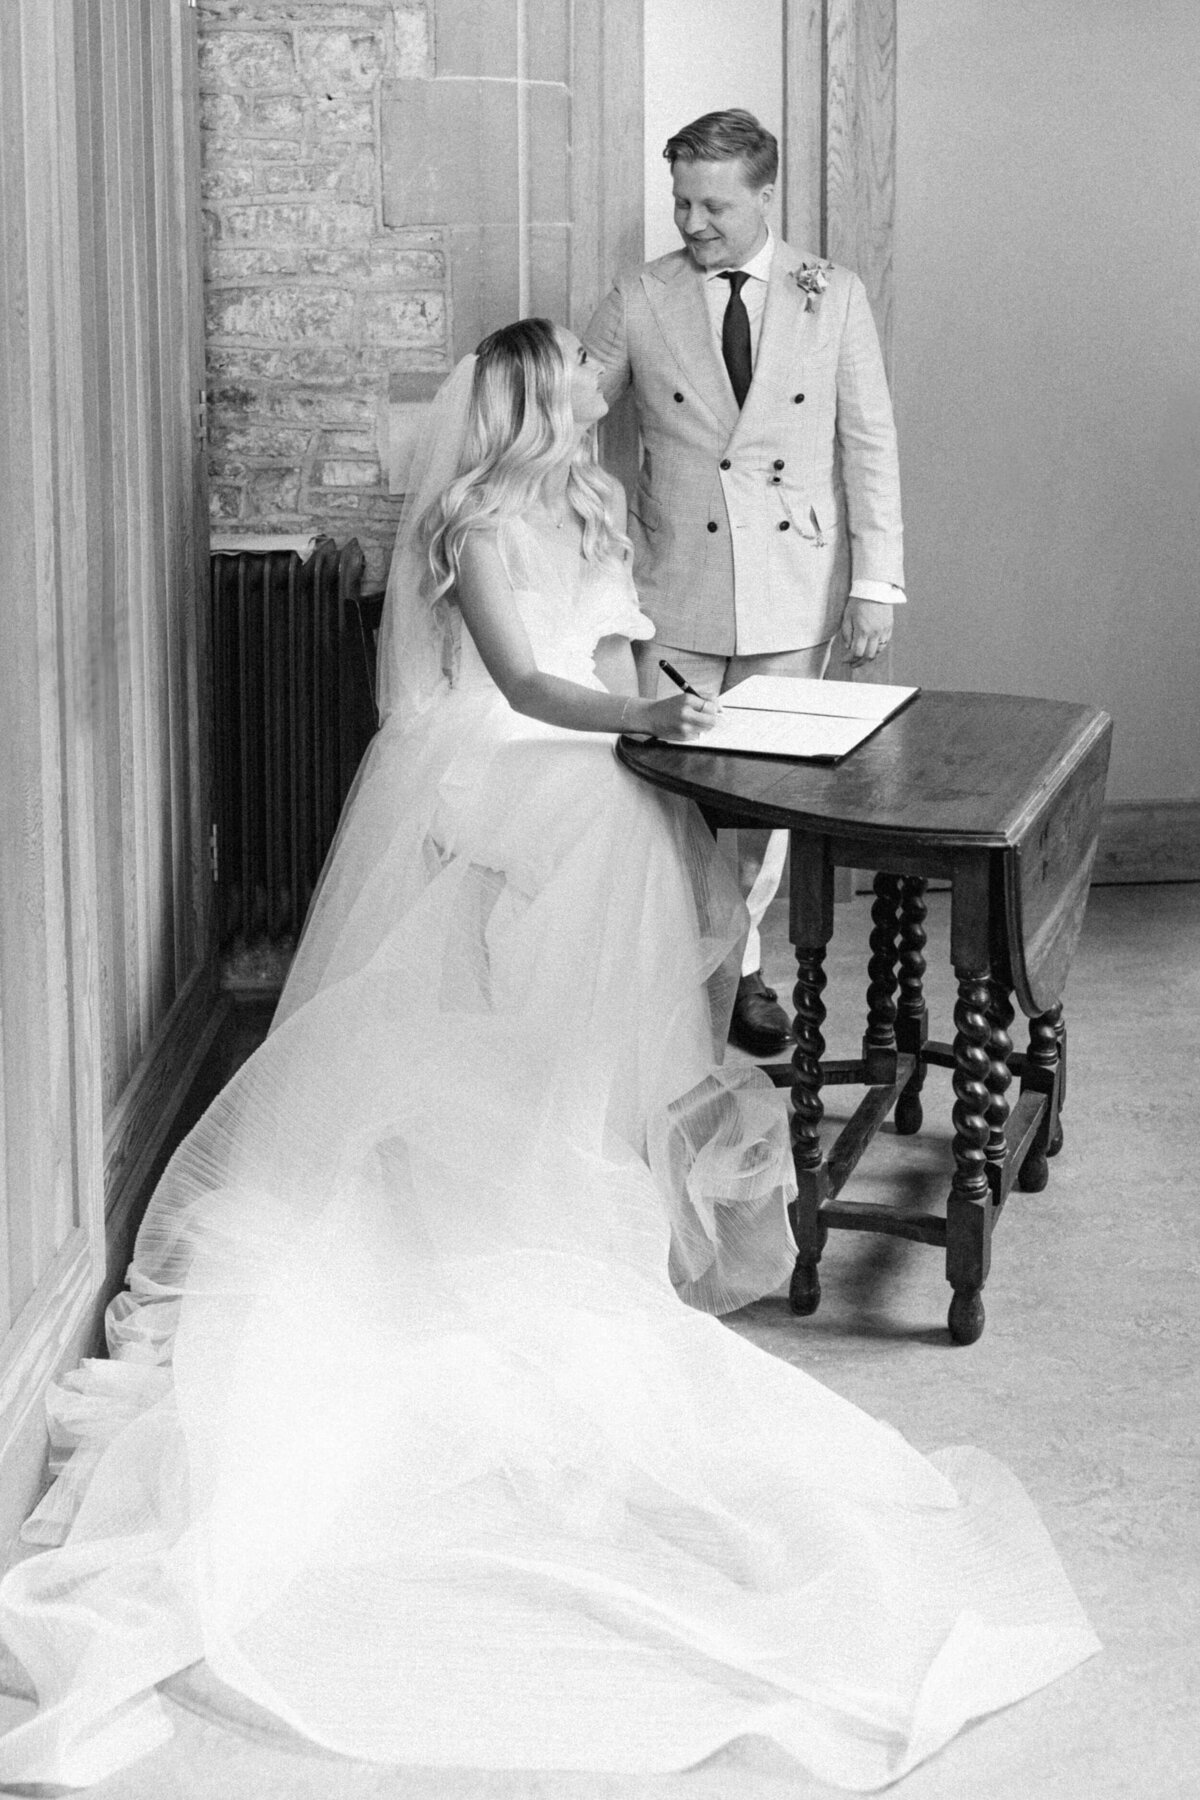 chloe-winstanley-weddings-ceremomy-signing-register-newhite-bridal